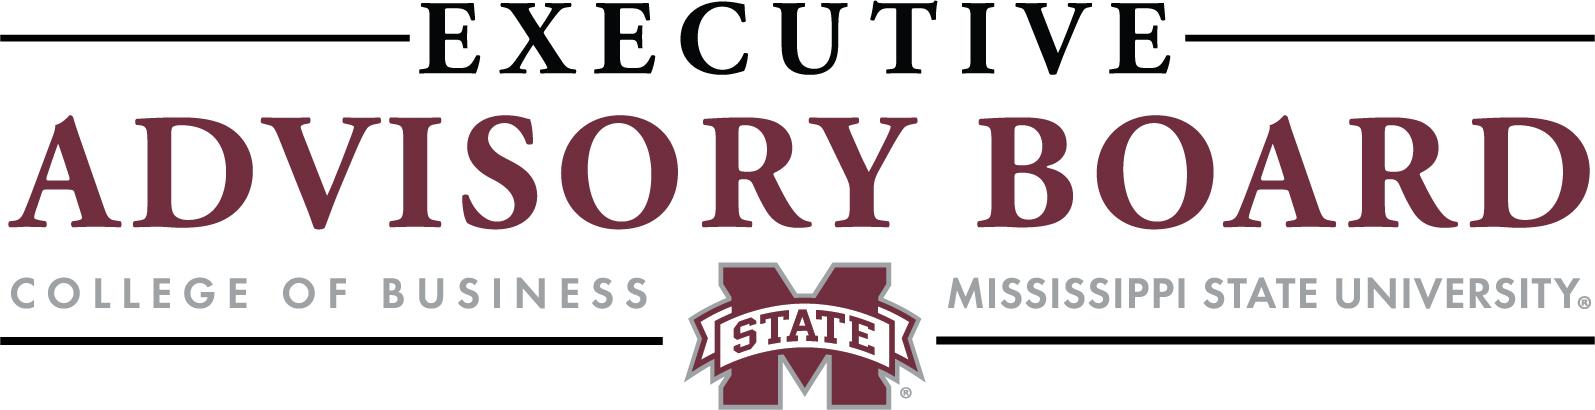 College of Business Executive Advisory Board Logo